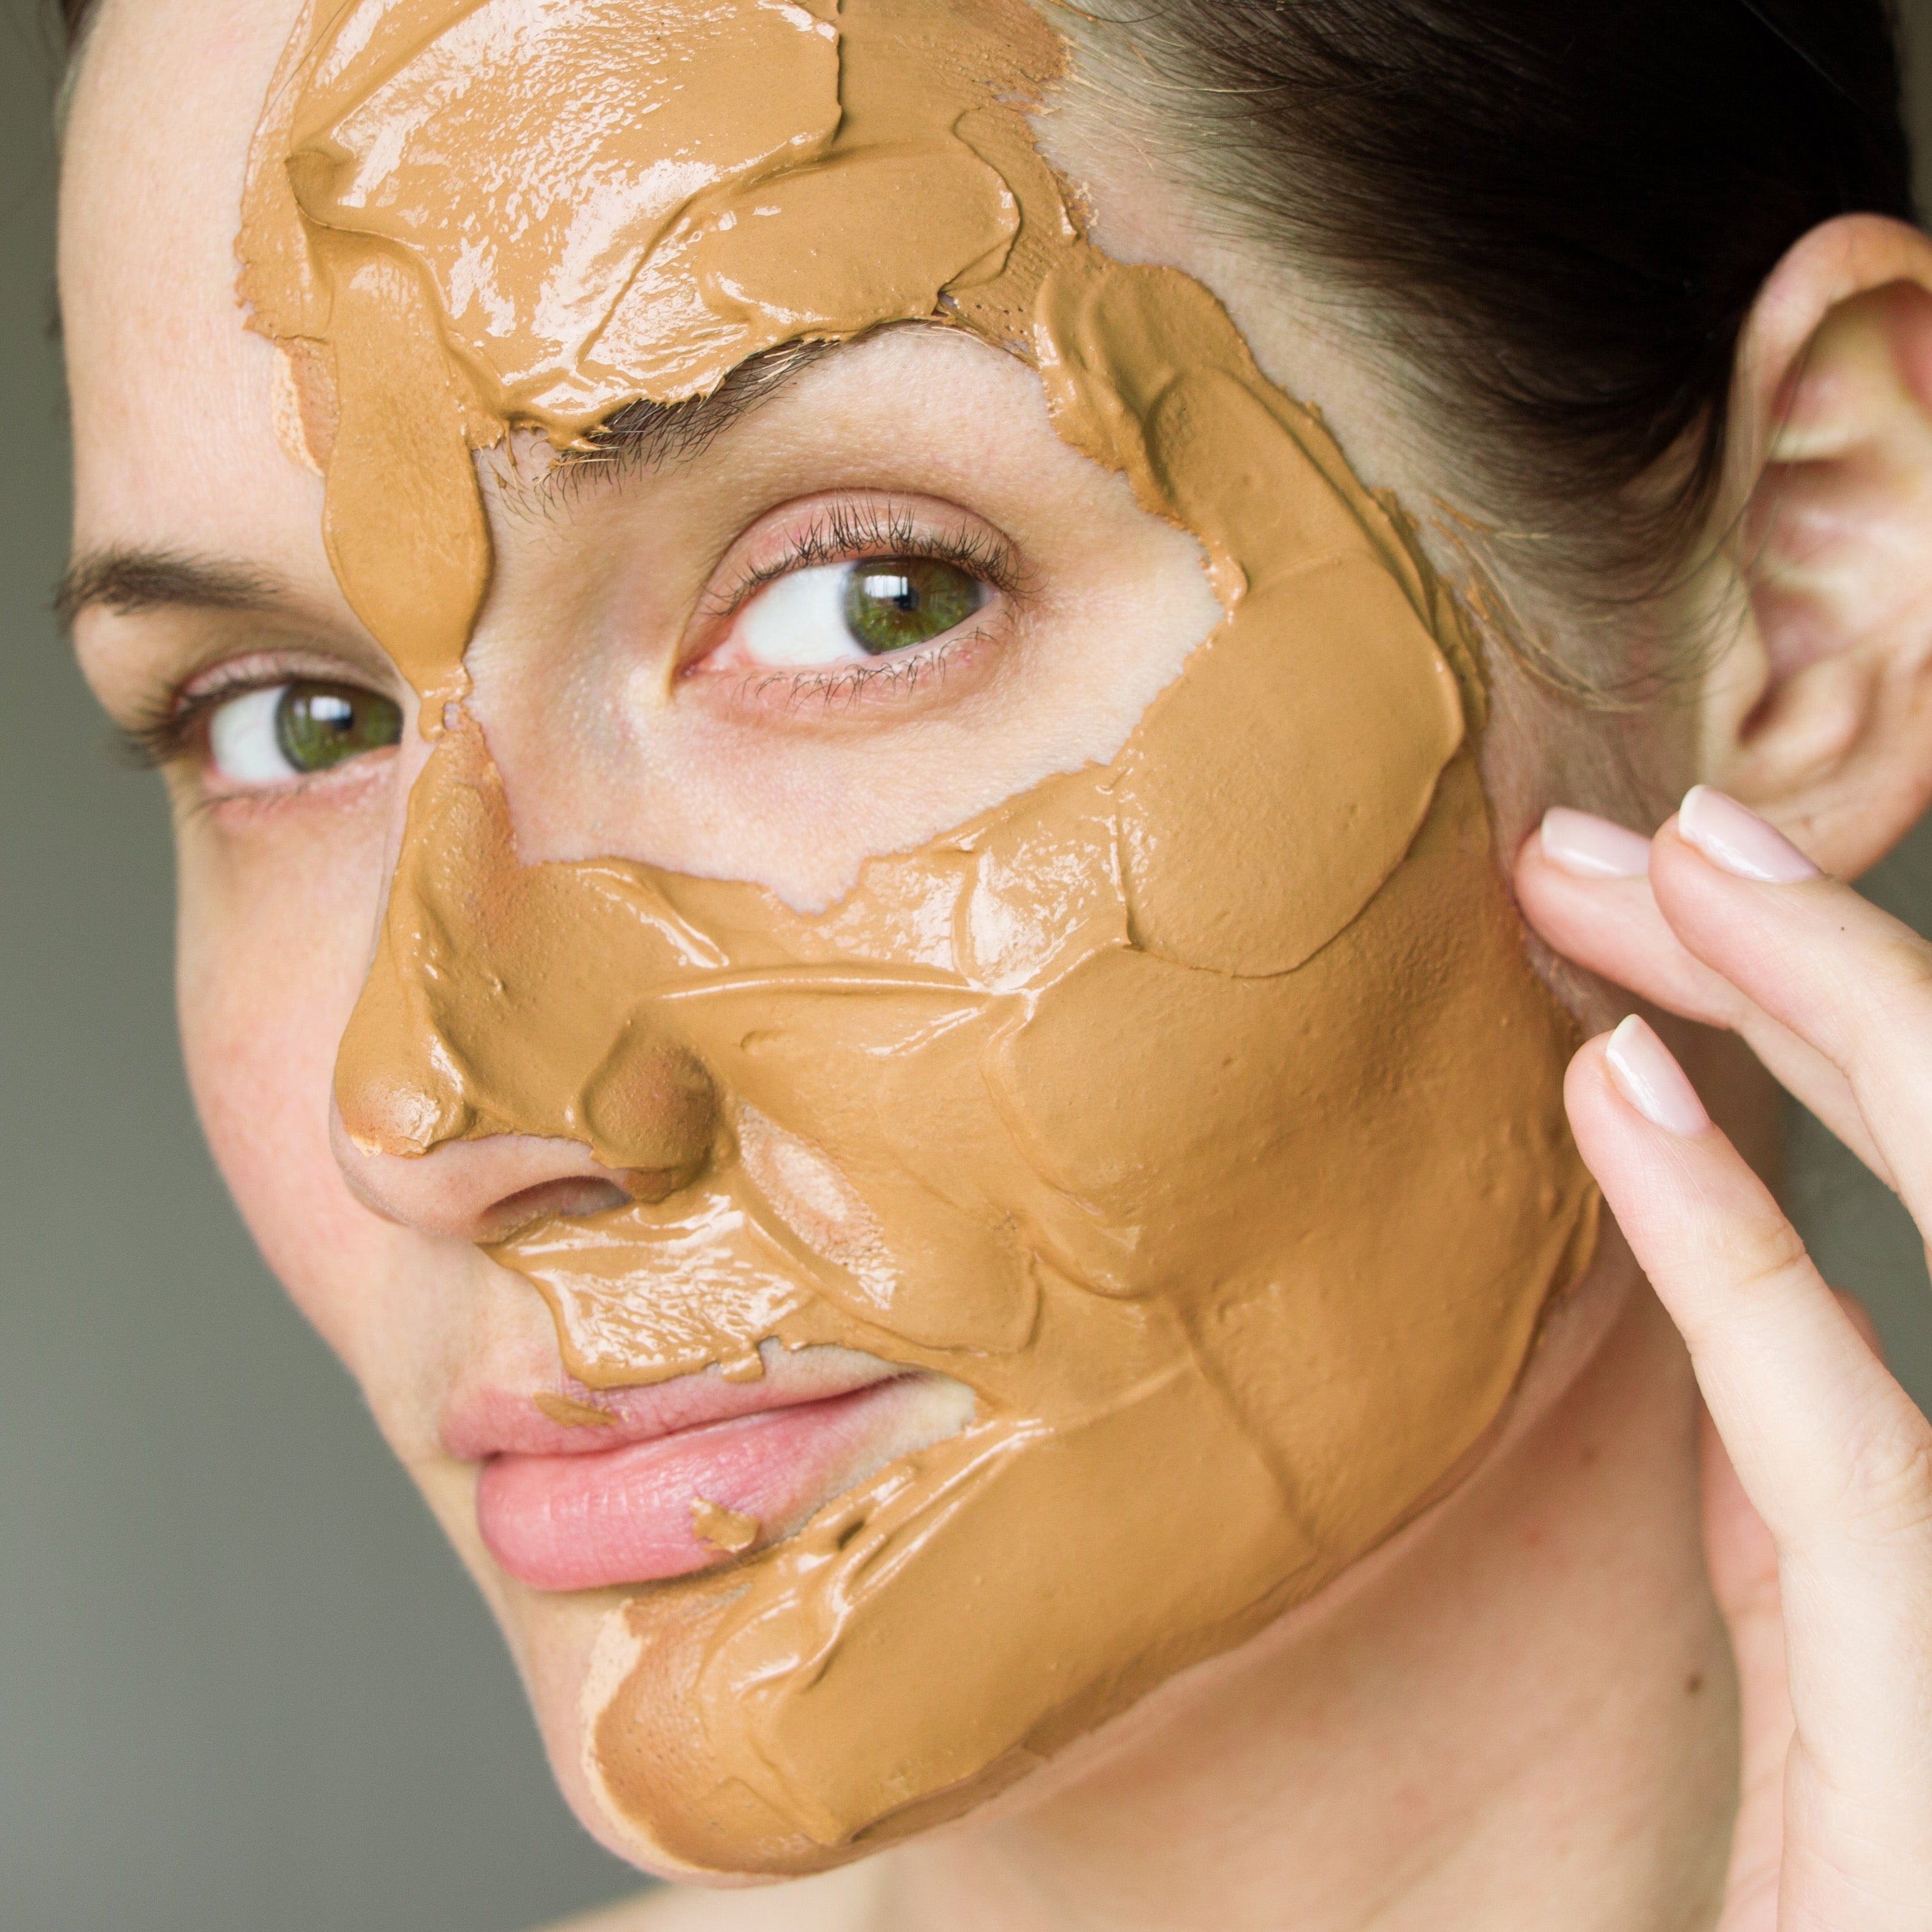 SkinBalance  Lotus+Coconut Clay Mask